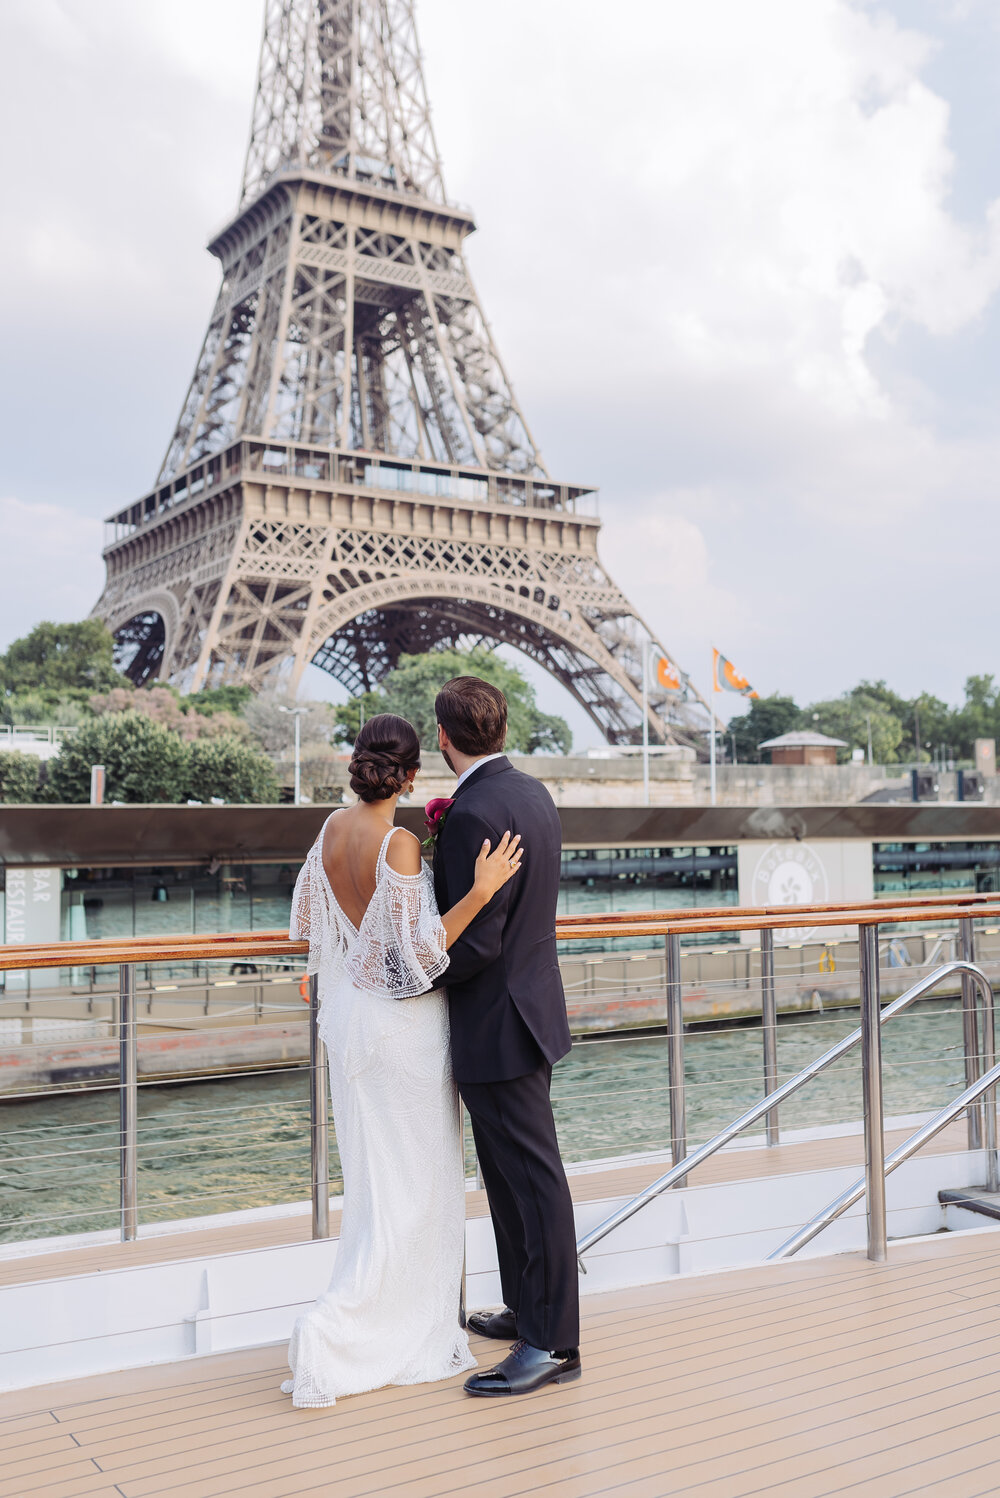 Paris Destination Wedding Reception on a River Seine Cruise-2, Hair and makeup by Onorina Jomir Beauty